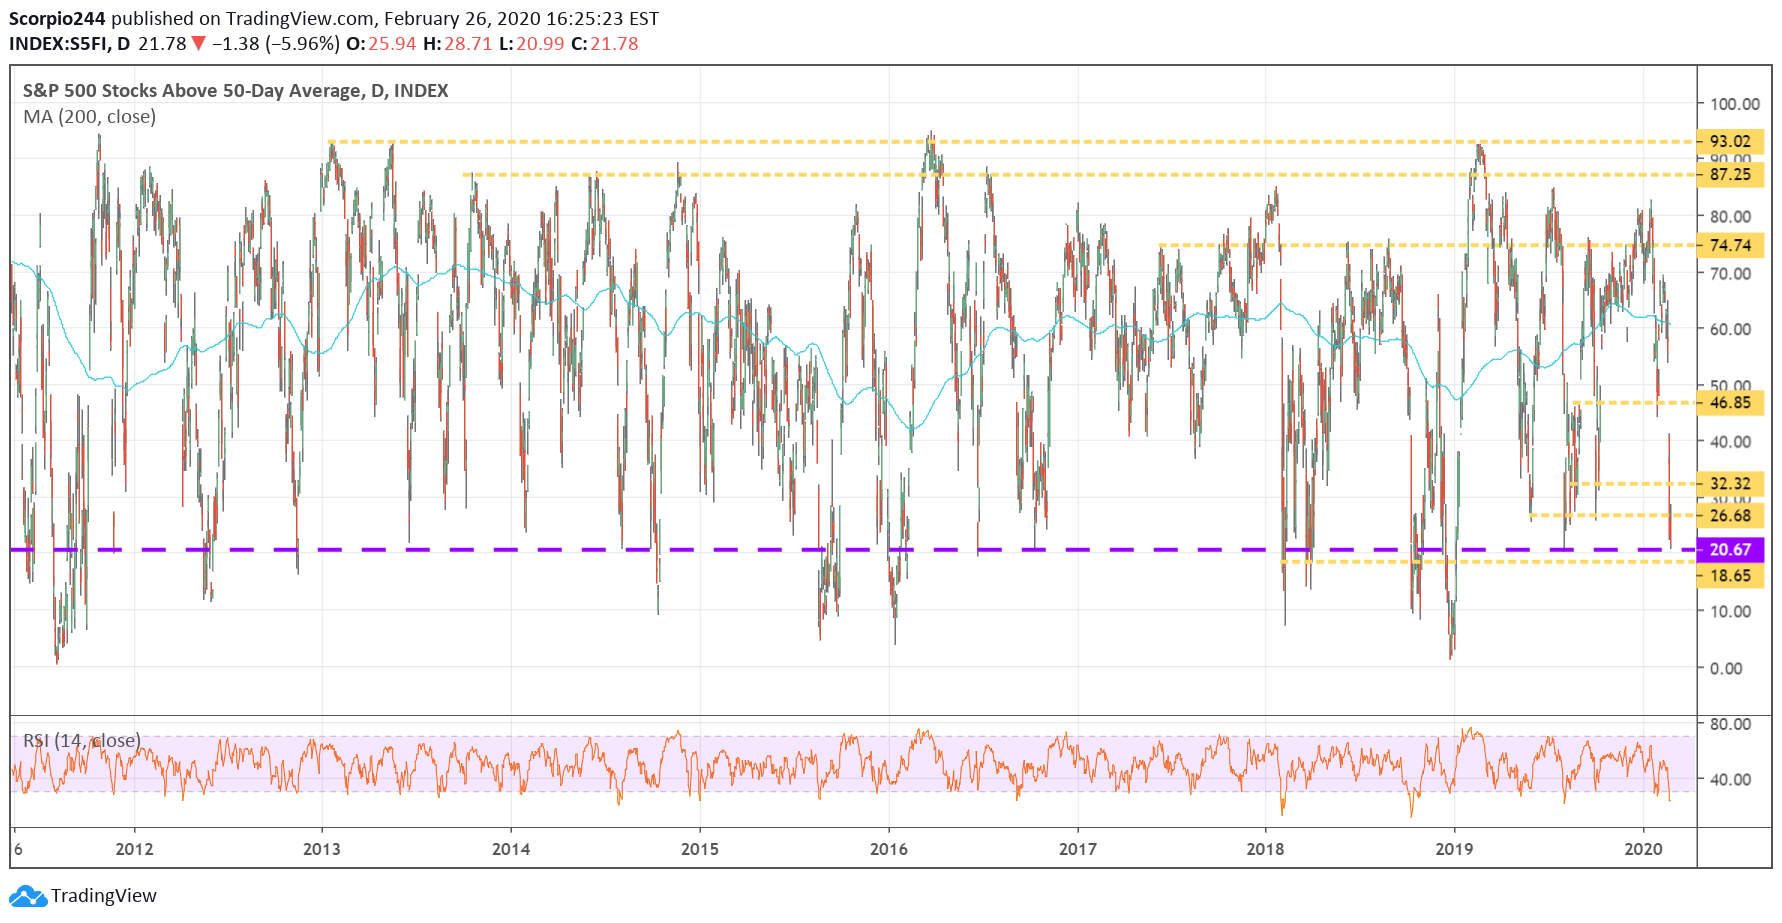 S&P 500 Index Chart